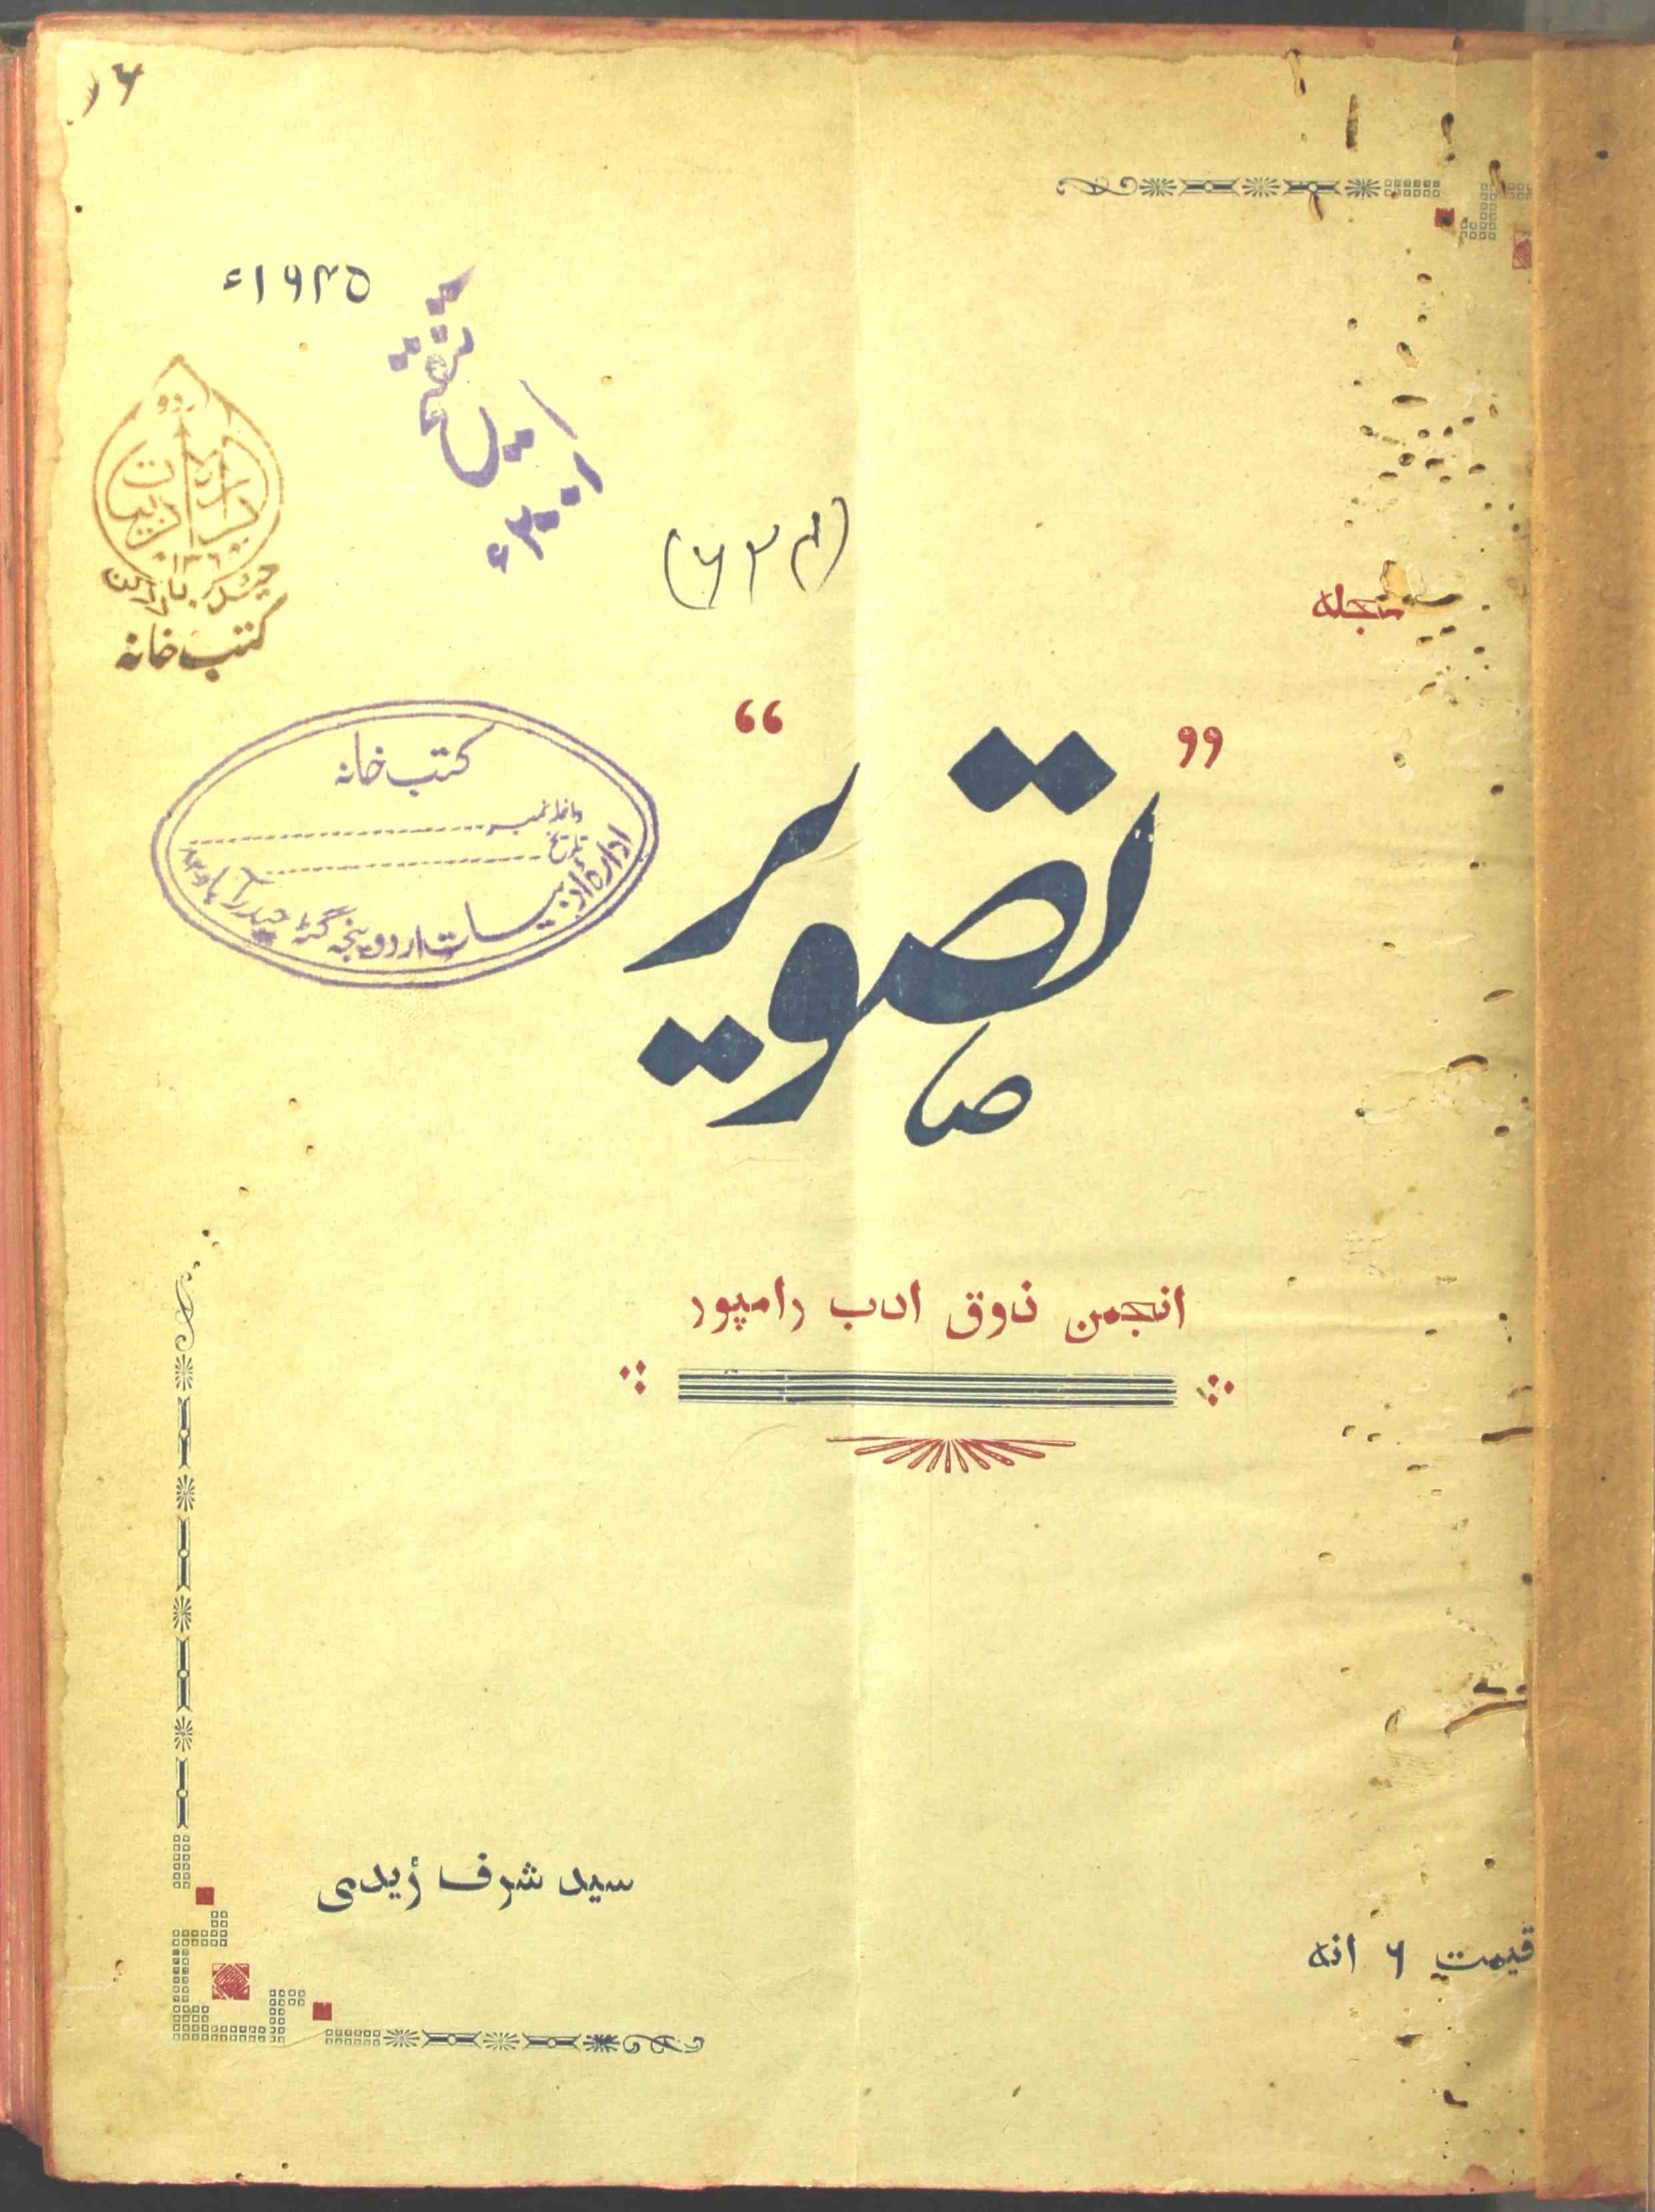 Tasveer Jild 6 No 1 January 1945-Shumara Number-001